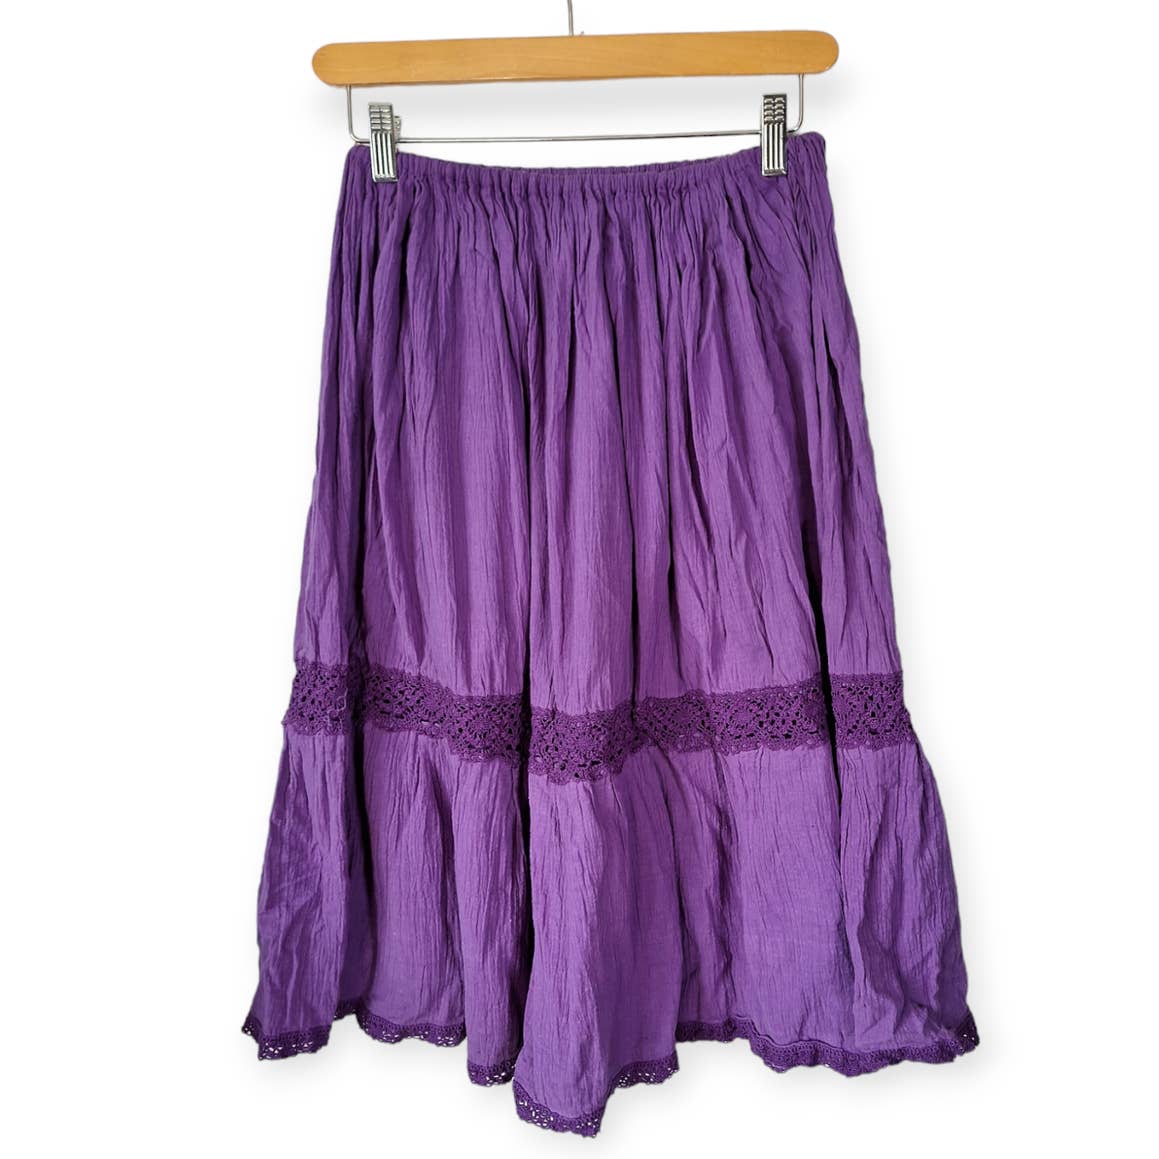 Vintage Purple Cotton Gauze Boho Skirt Cropped Blouse Set Women's Size L/1X 16/18 - themallvintage The Mall Vintage 1970s Boho Matching Set